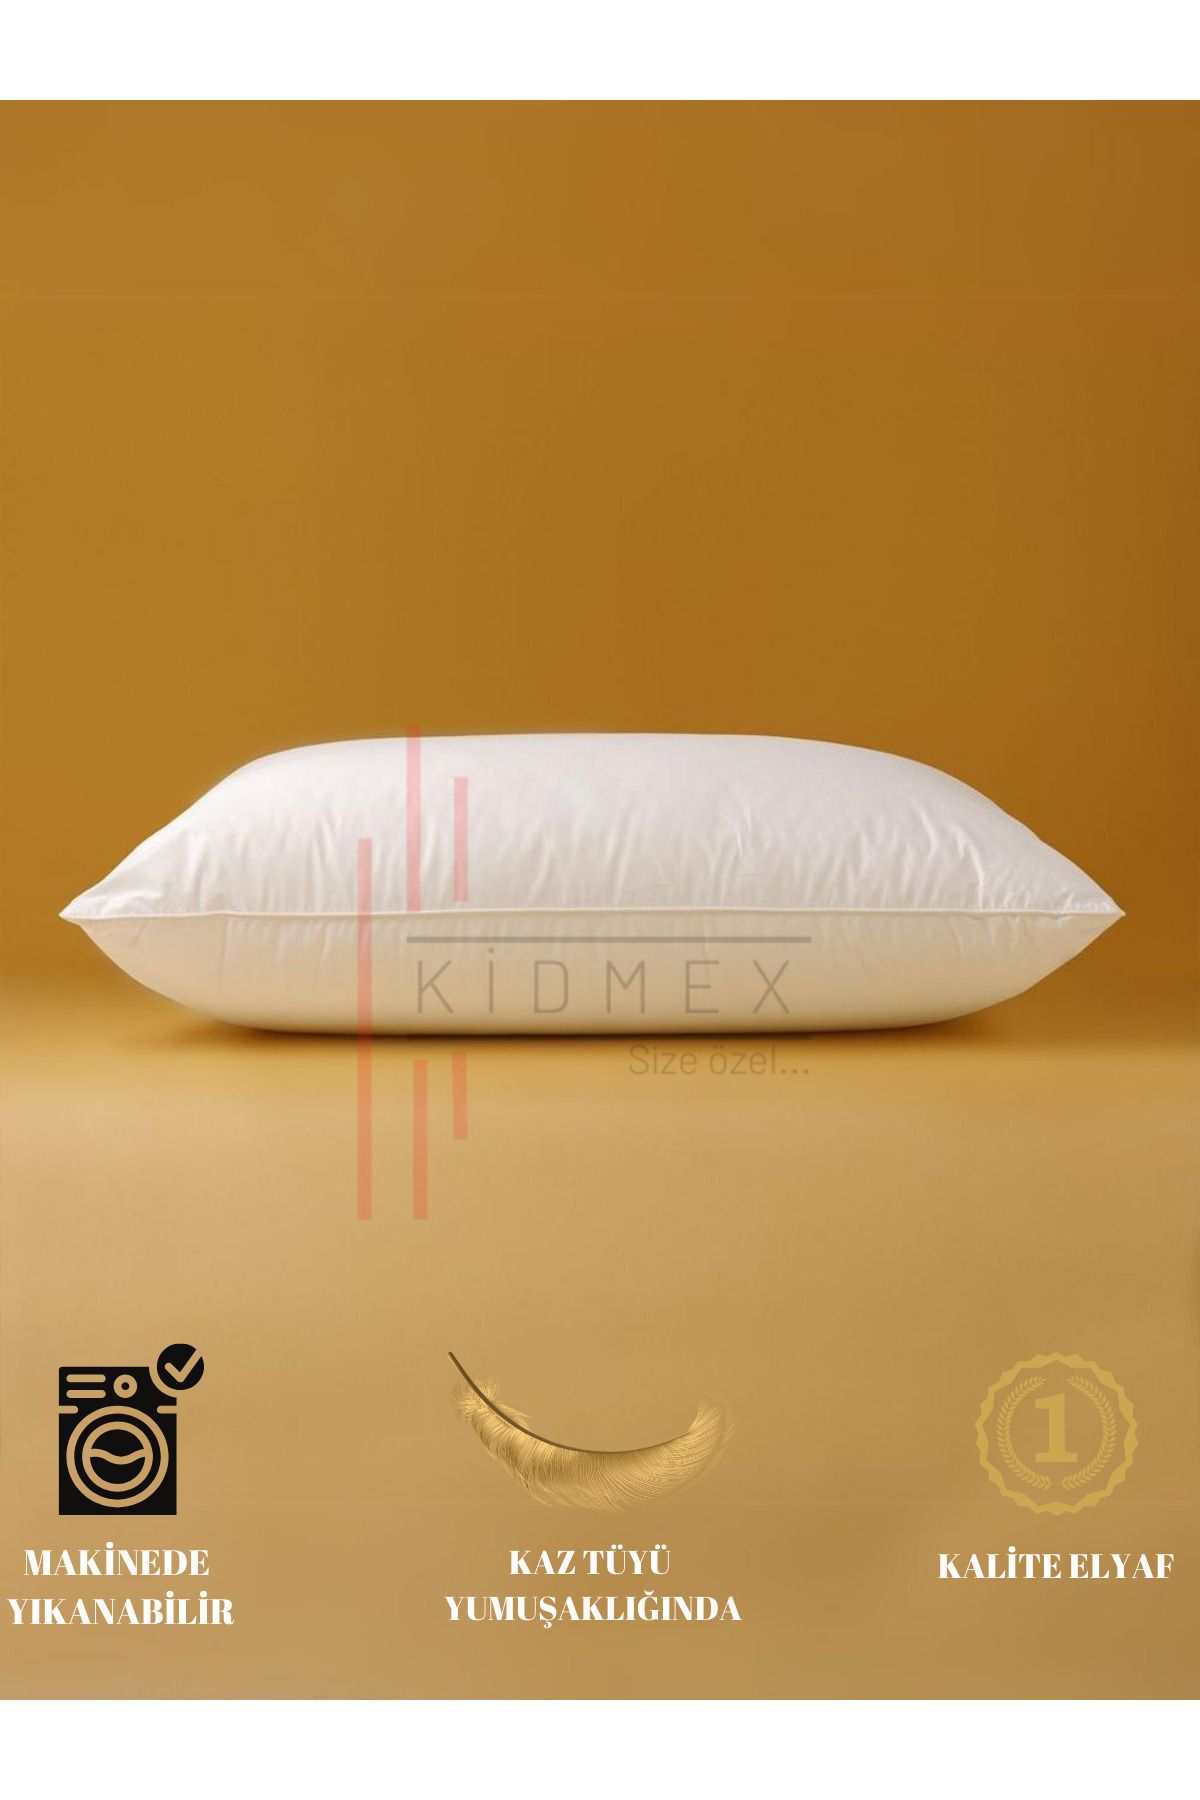 Kidmex Premium Rahat Yüksek Yastık (1 ADET 1000GR)